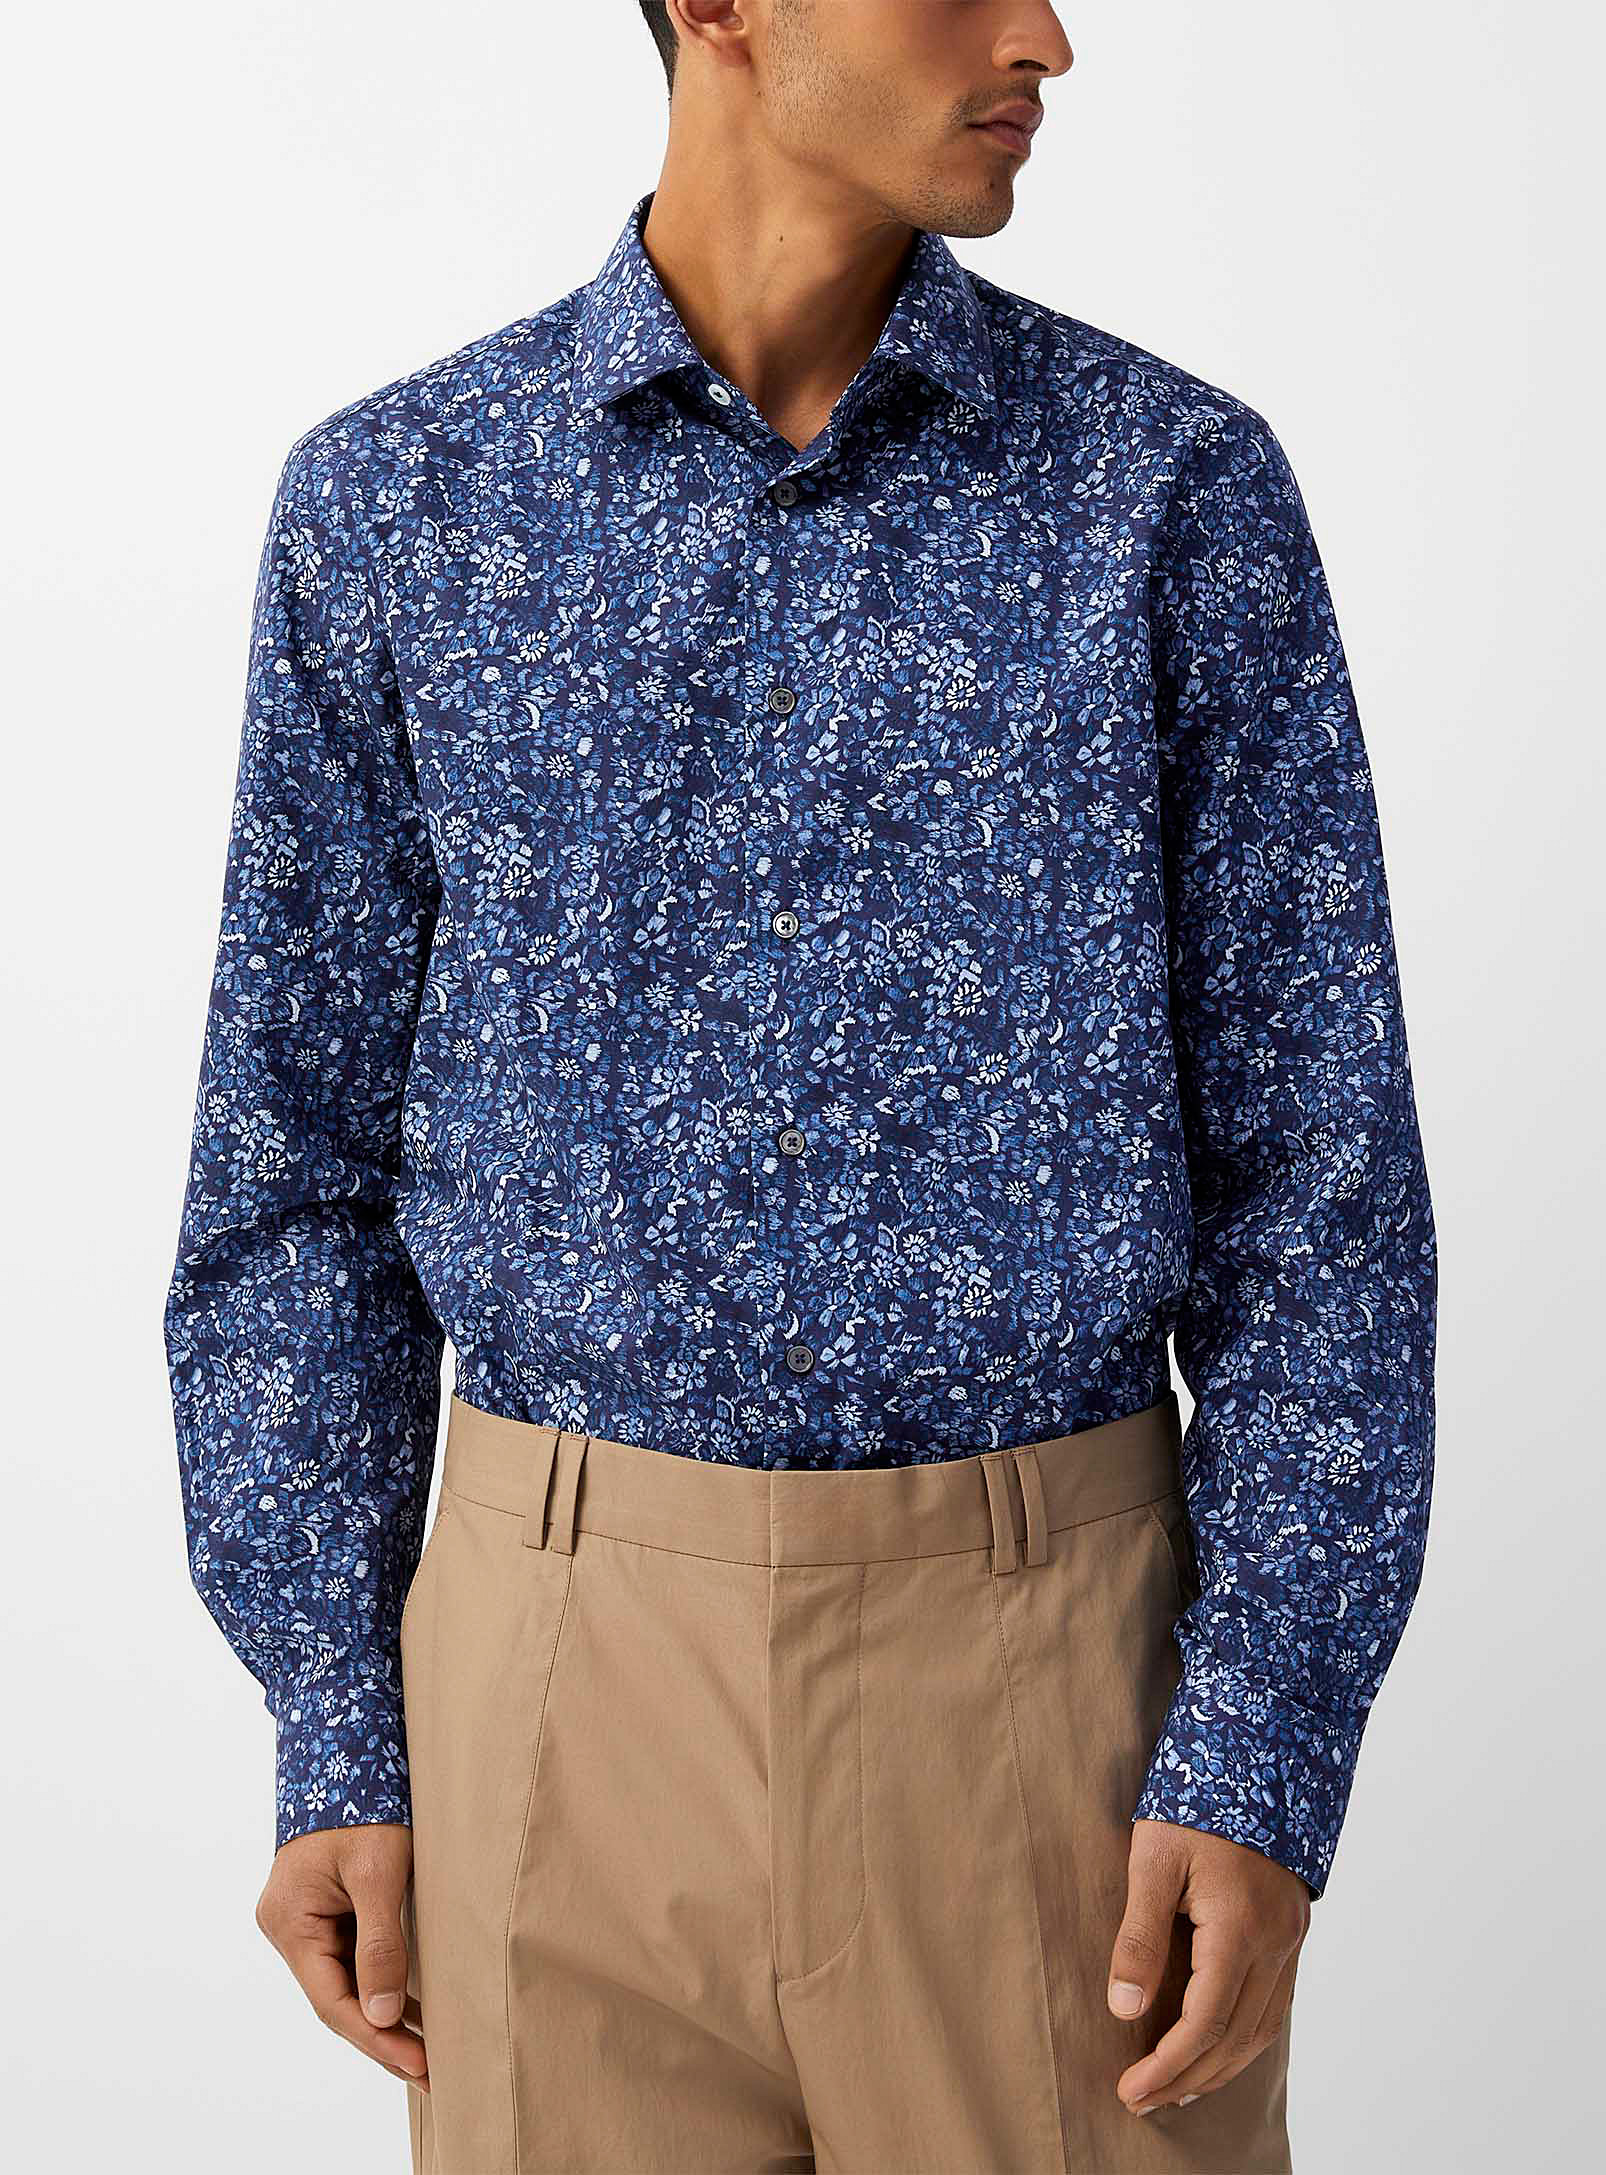 Paul Smith Cobalt Flowers Shirt In Blue